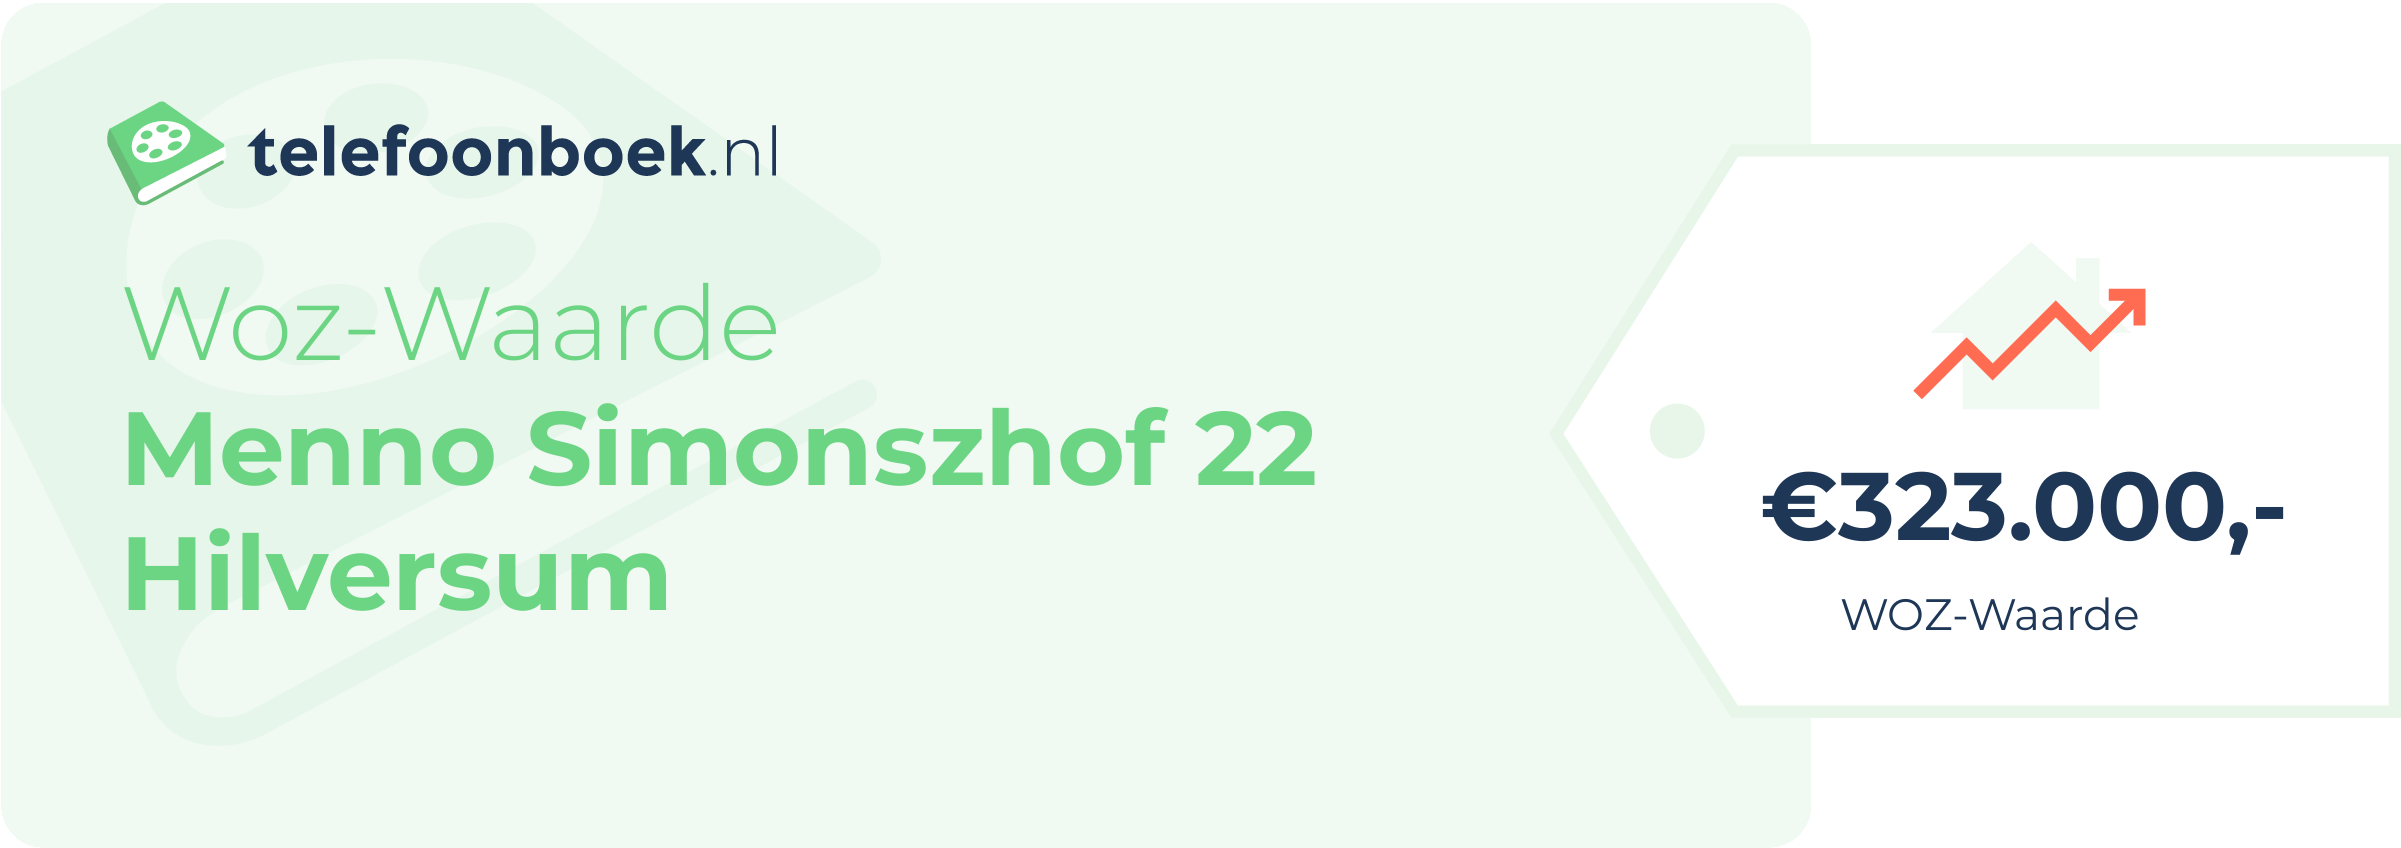 WOZ-waarde Menno Simonszhof 22 Hilversum